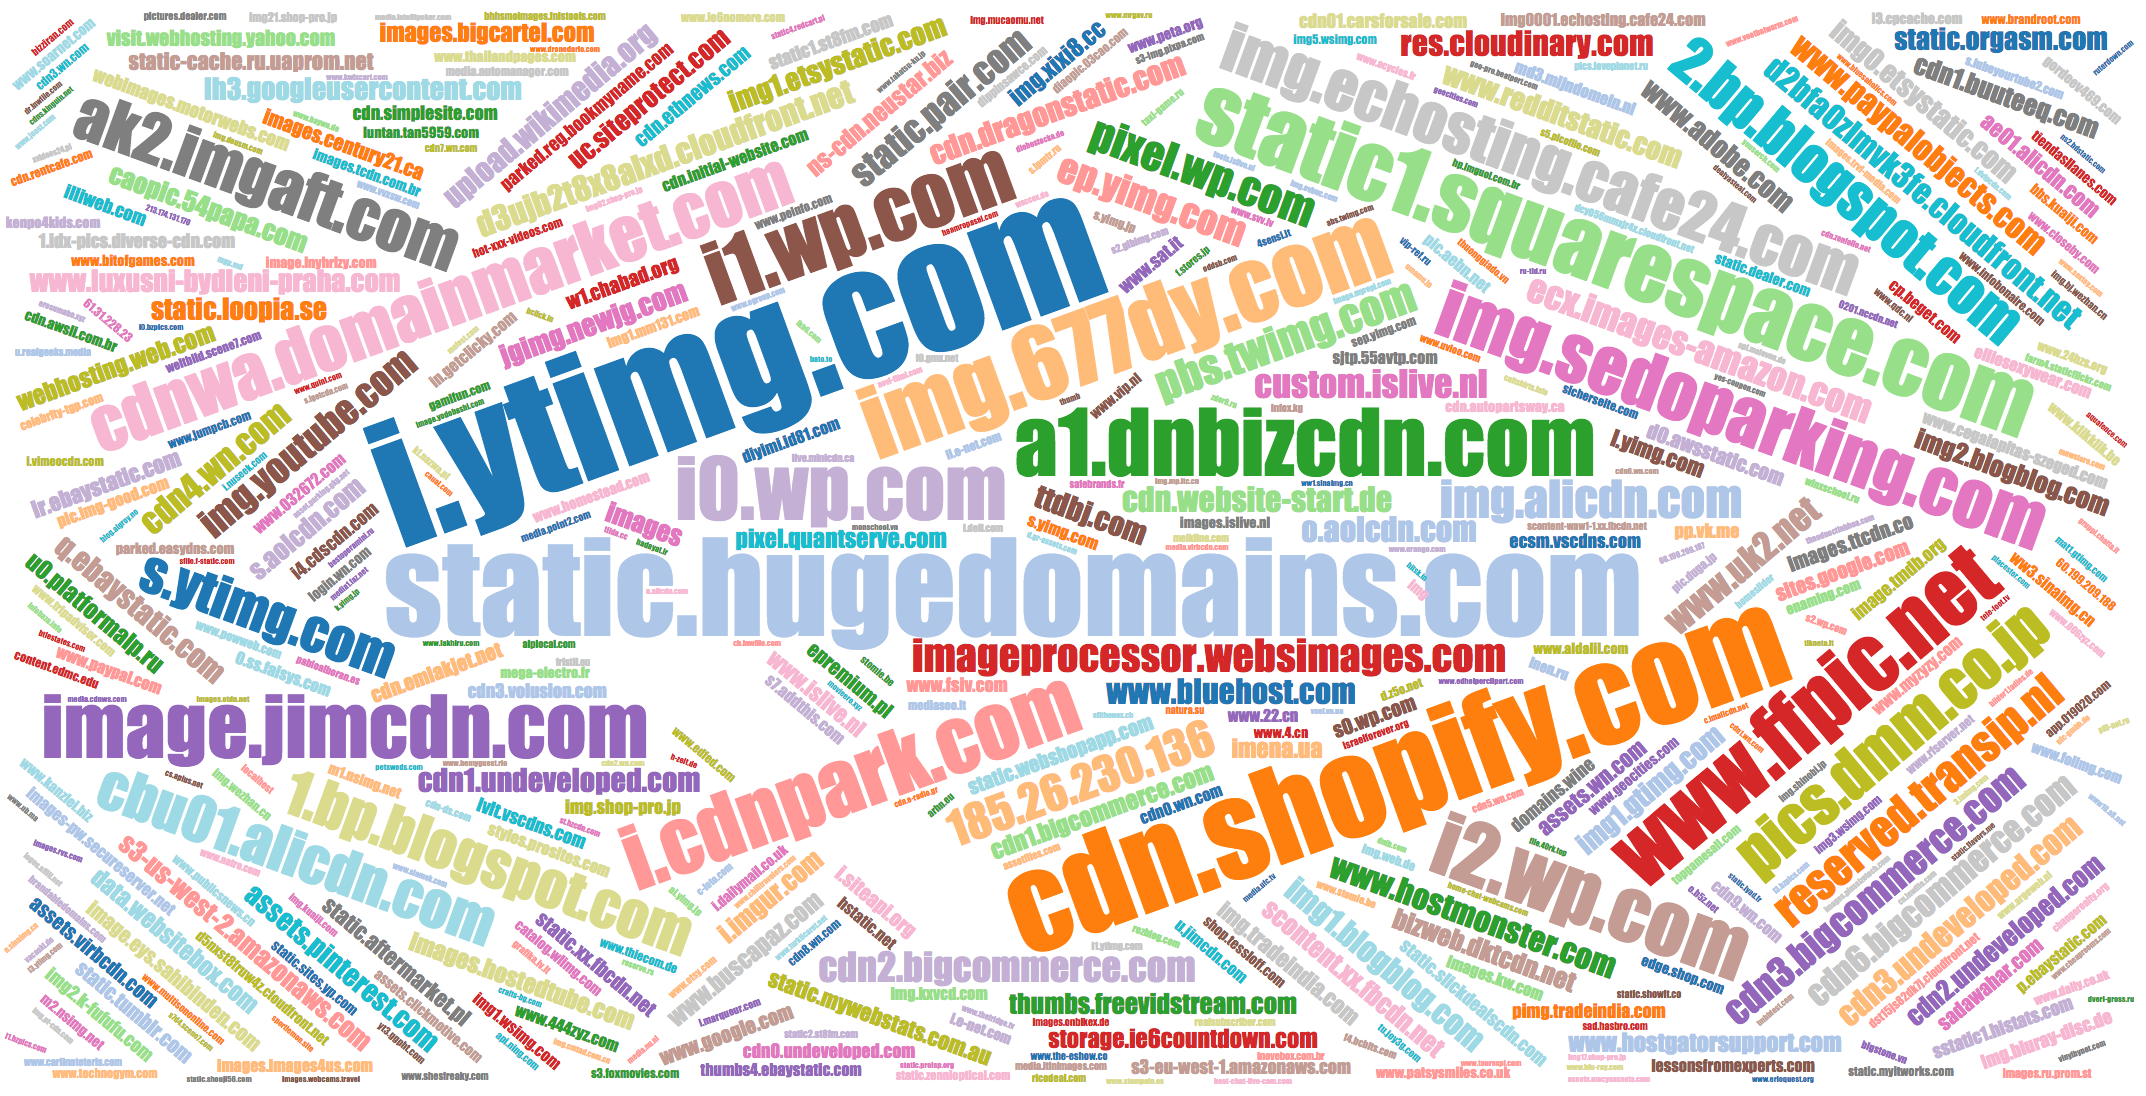 Popular names of IMG domains ak2.imgaft.com, assets.youniqueproducts.com, etc.